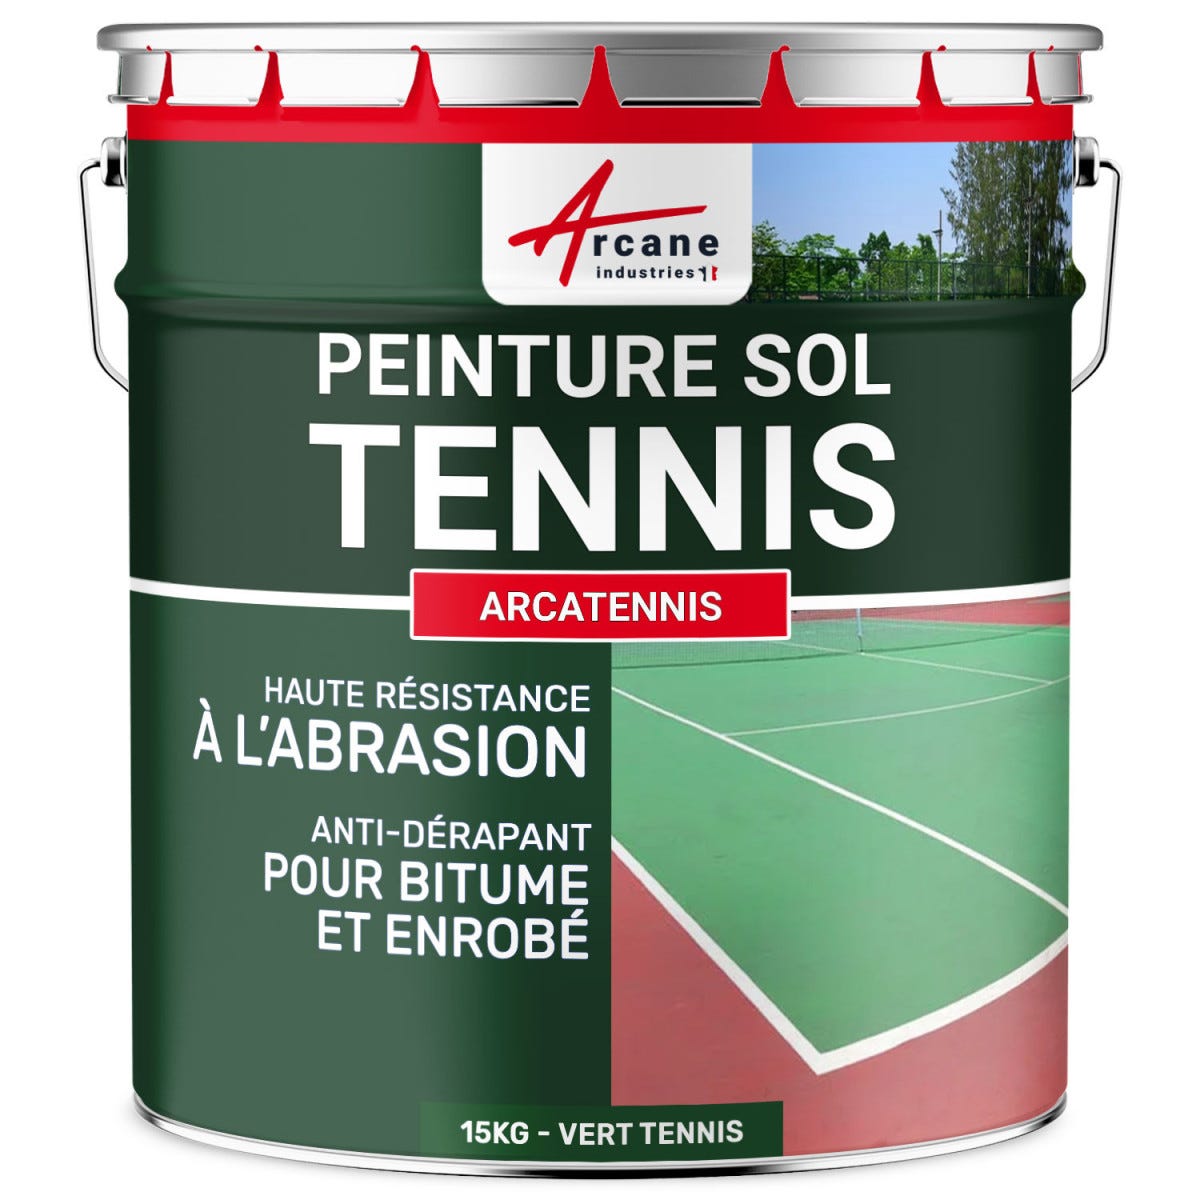 PEINTURE TENNIS - ARCATENNIS. Vert Tennis - 15 kg (jusqu'à 30 m² en 2 couches)ARCANE INDUSTRIES 0